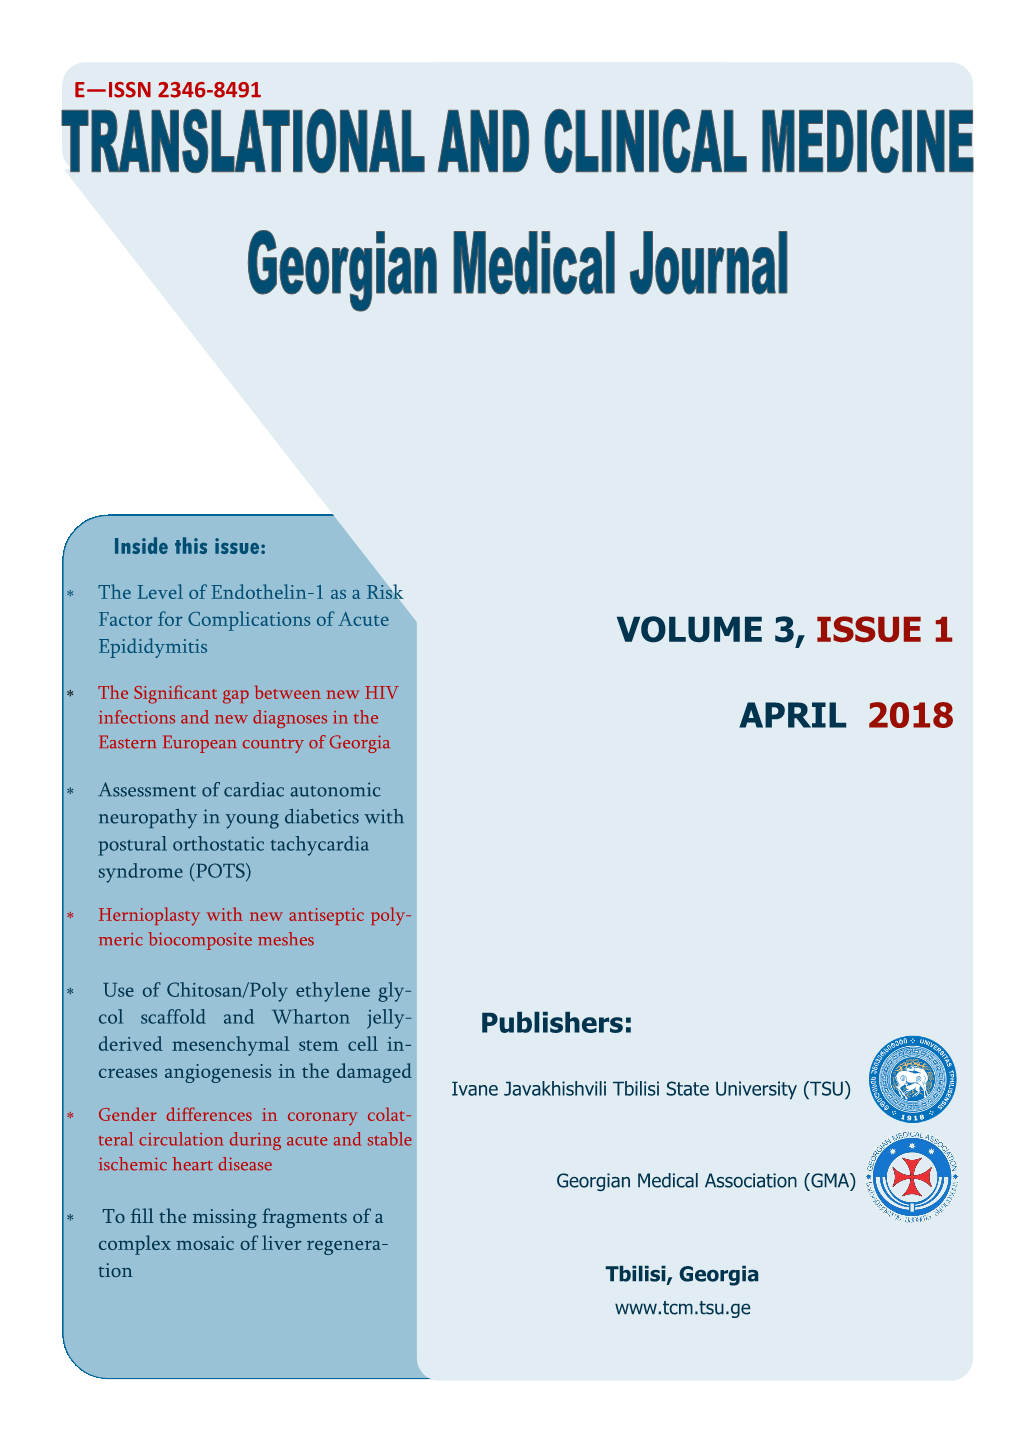 Volume 3, Issue 1 April 2018